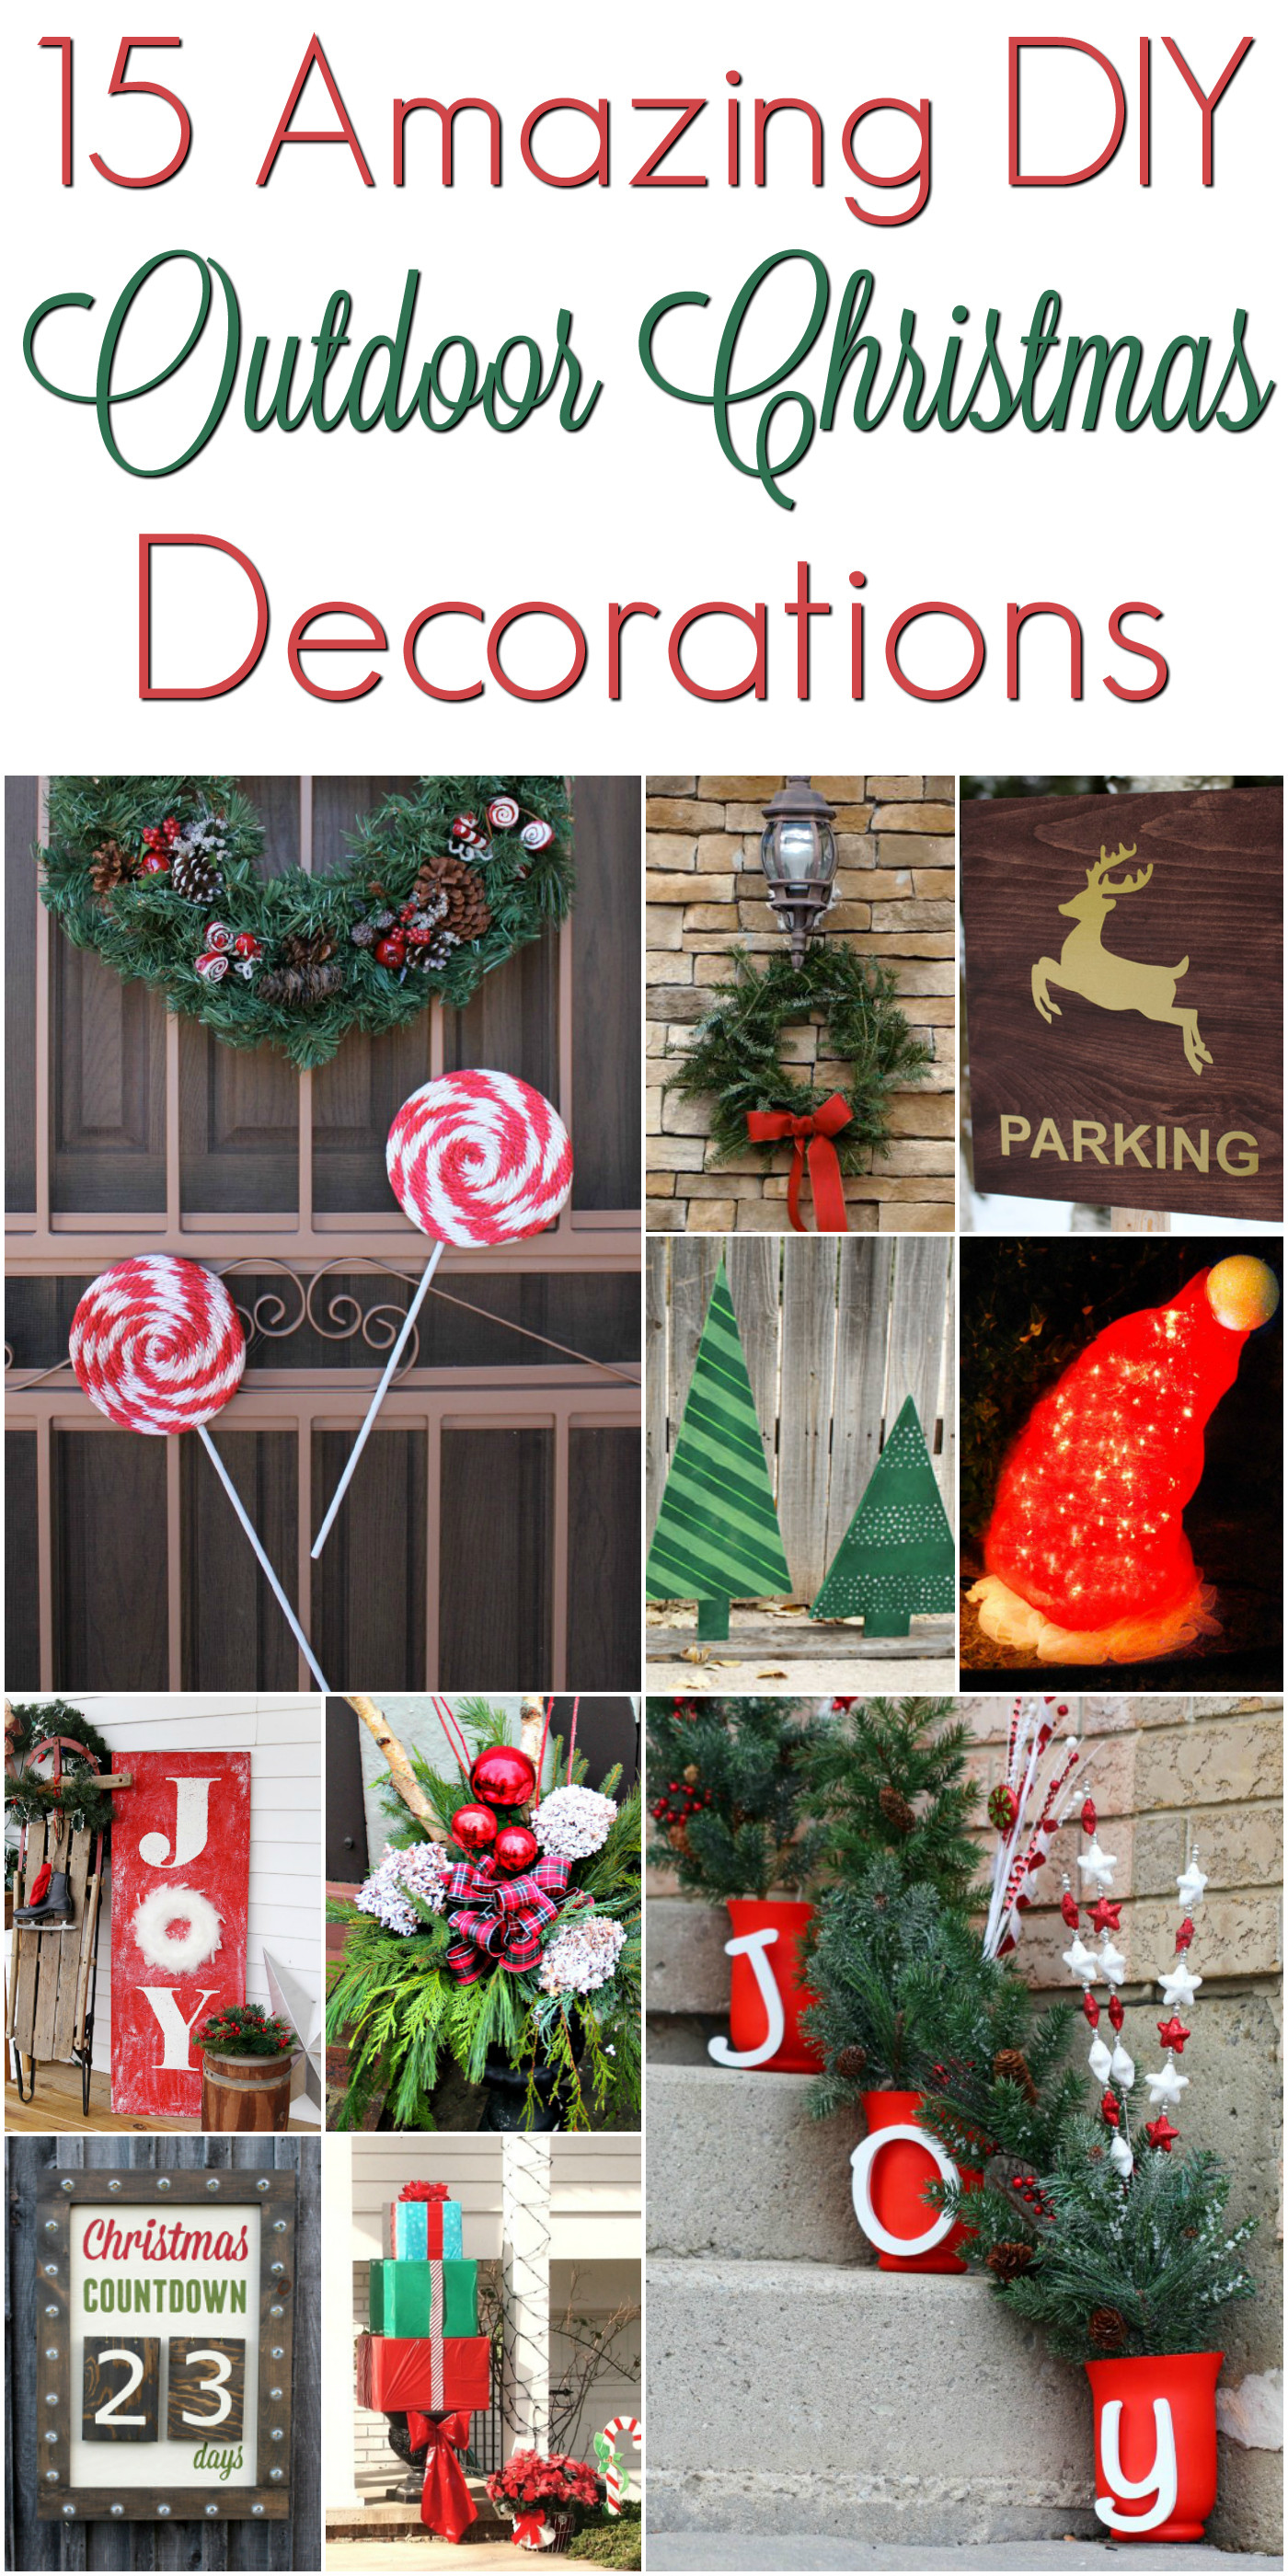 Build Outdoor Christmas Decorations
 DIY Christmas Outdoor Decorations ChristmasDecorations